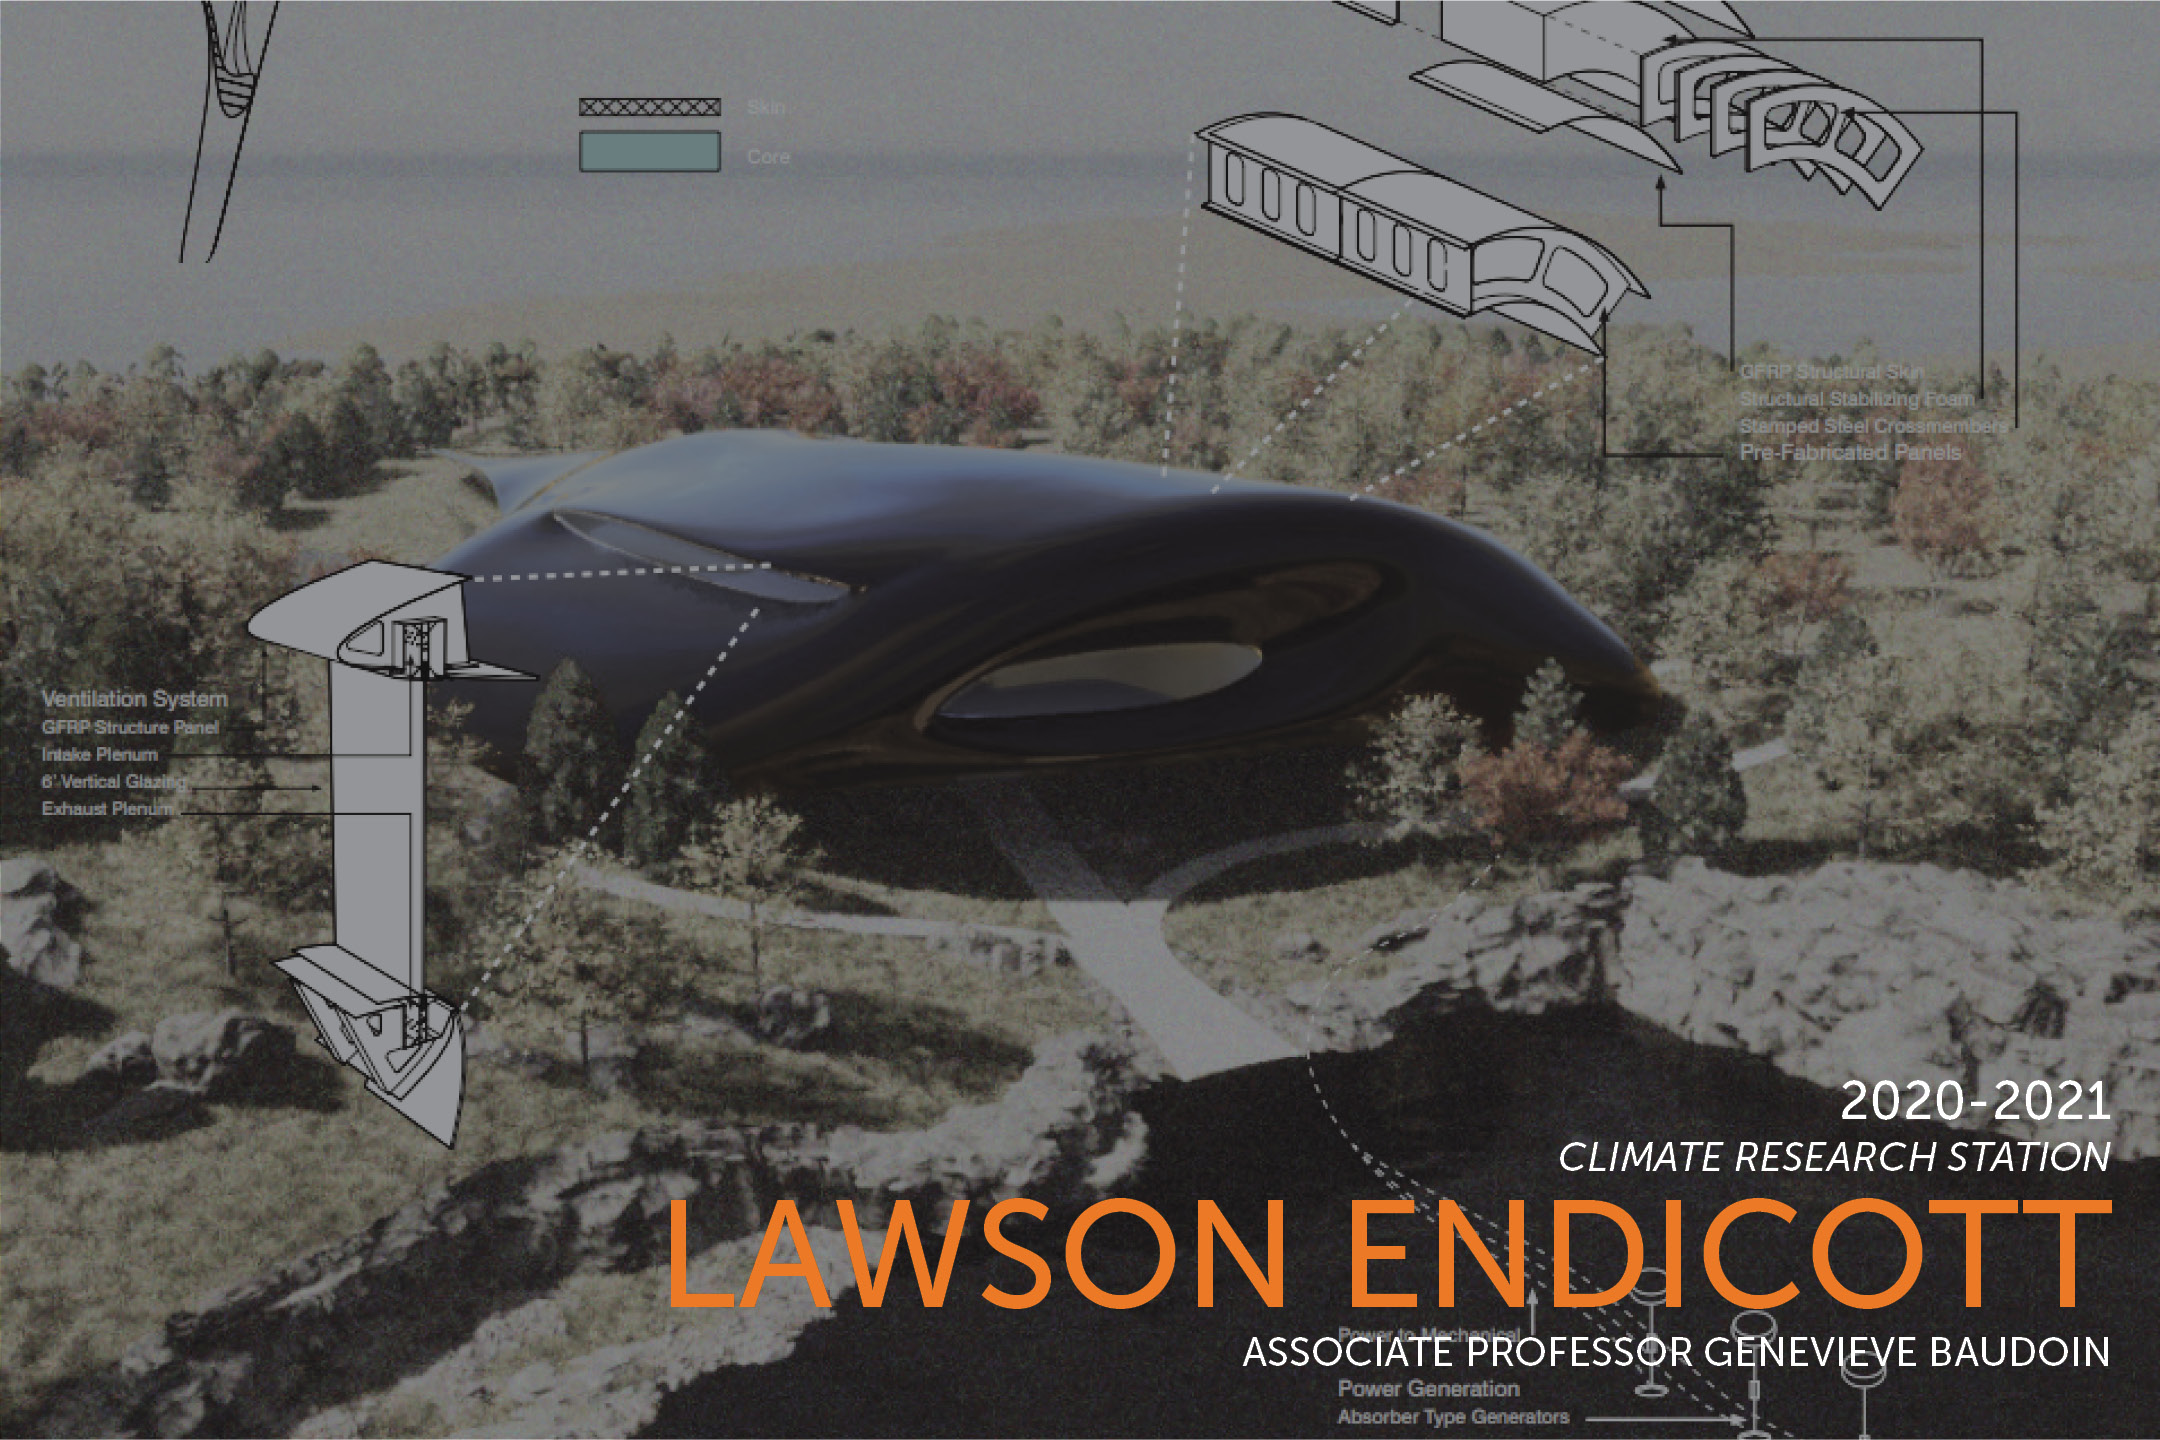 lawson endicott's Work